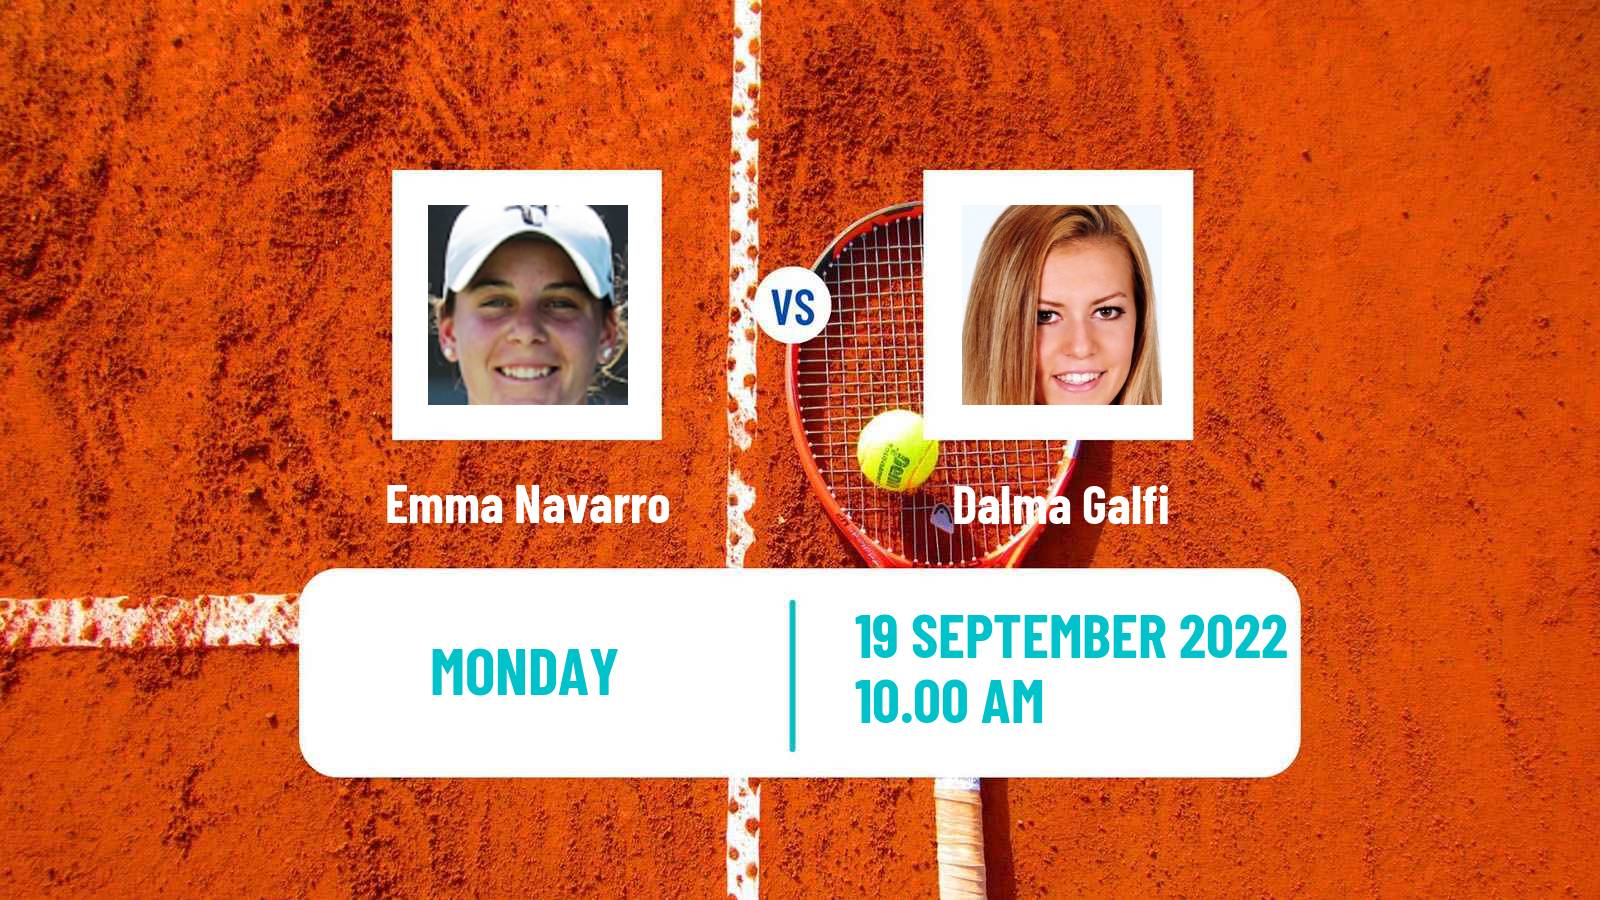 Tennis ATP Challenger Emma Navarro - Dalma Galfi